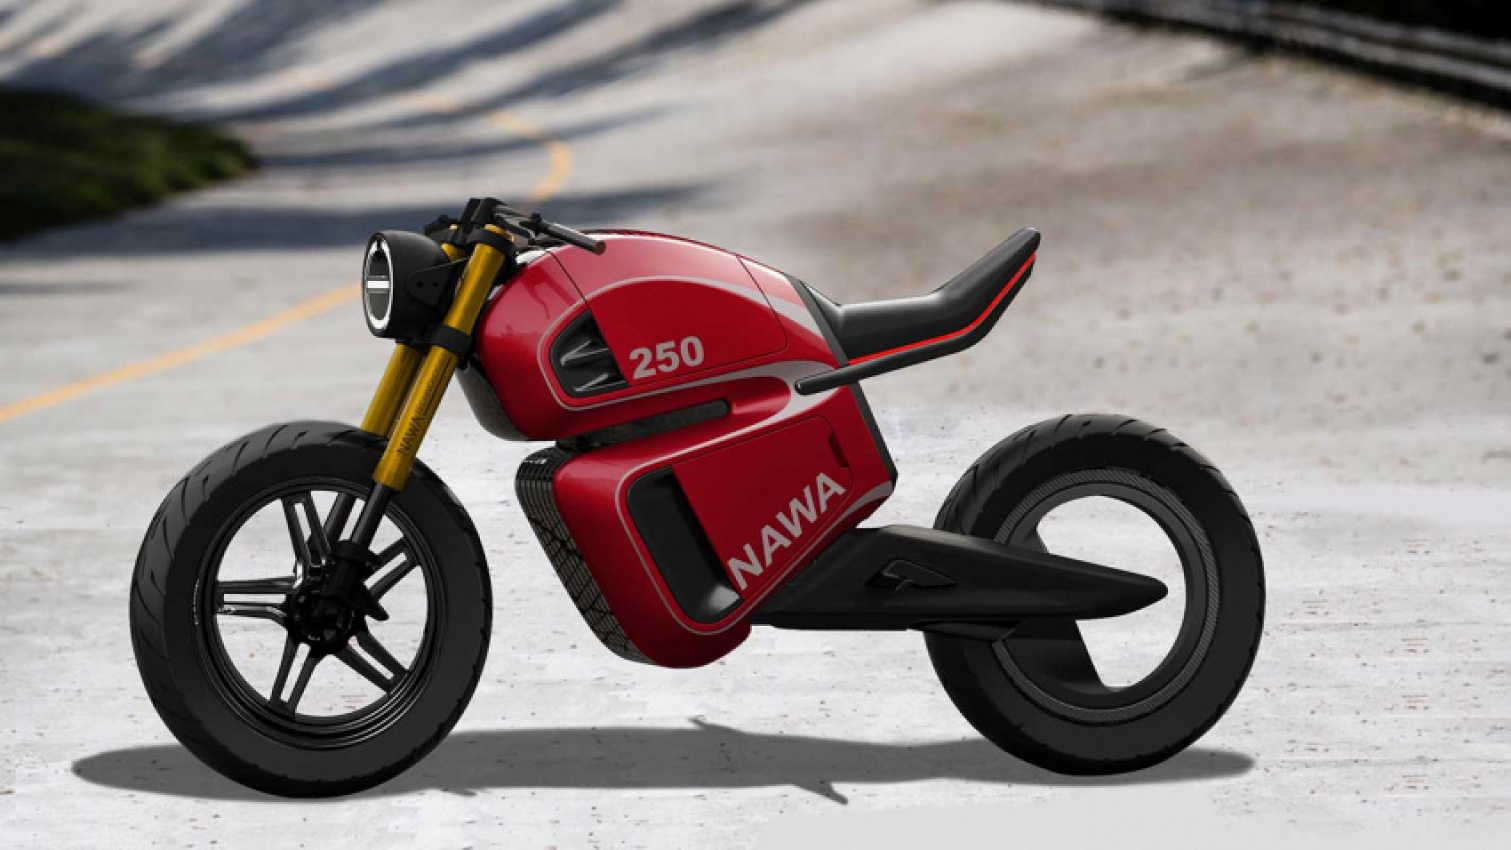 acer, autos, cars, e-scooters & e-bikes, nawa, nawa racer, nawa racer rideable prototype unveiled